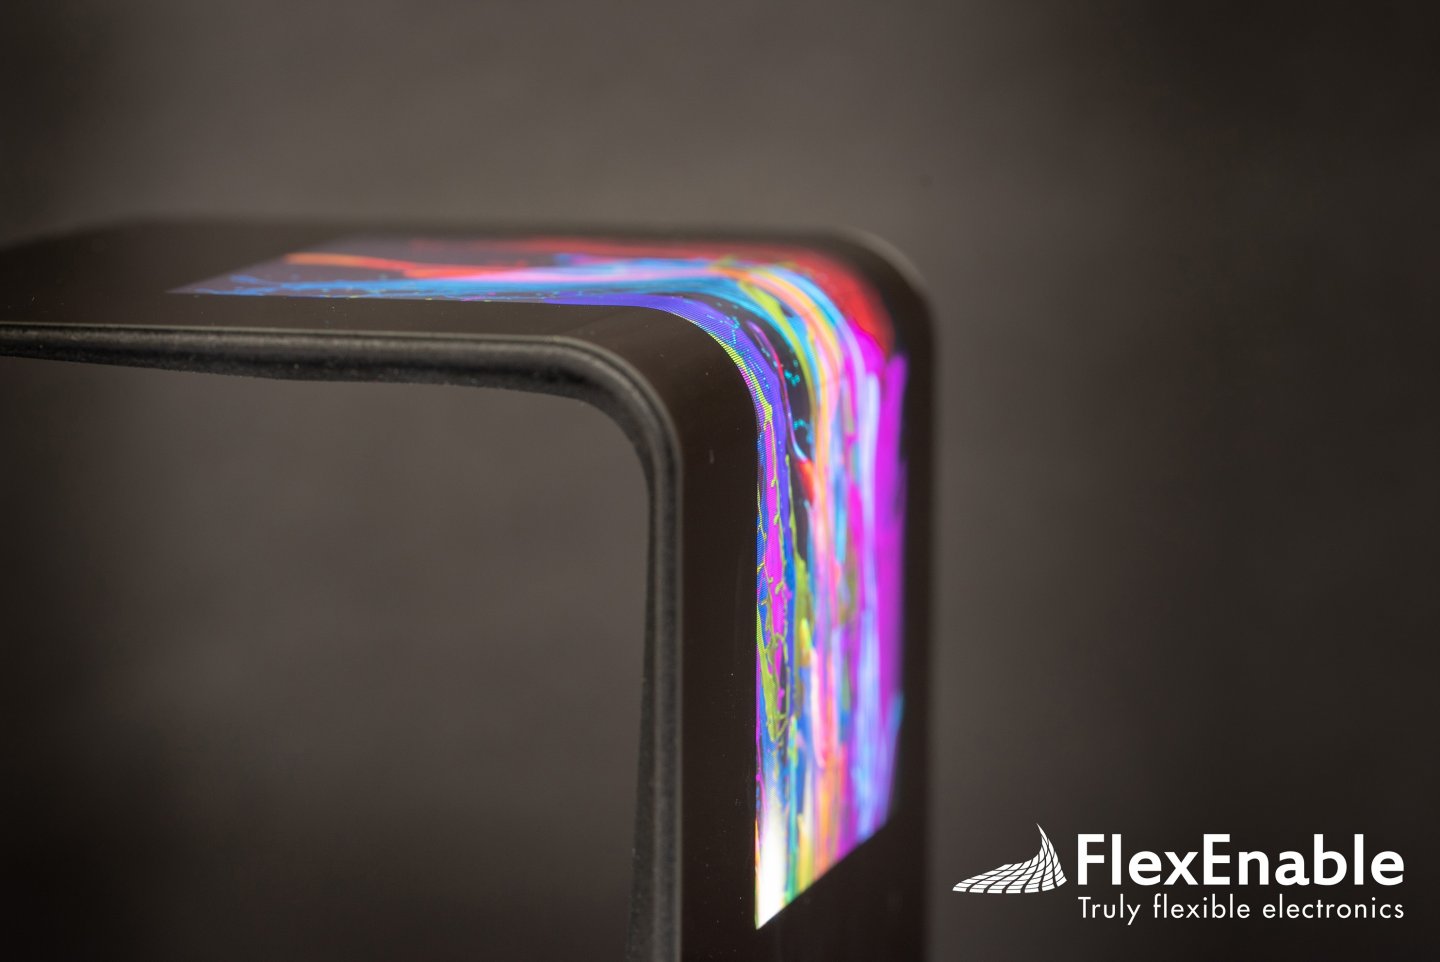 FlexEnable 獲得 1,100萬美元 B 輪融資，將與中強光電合作生產可撓式顯示器